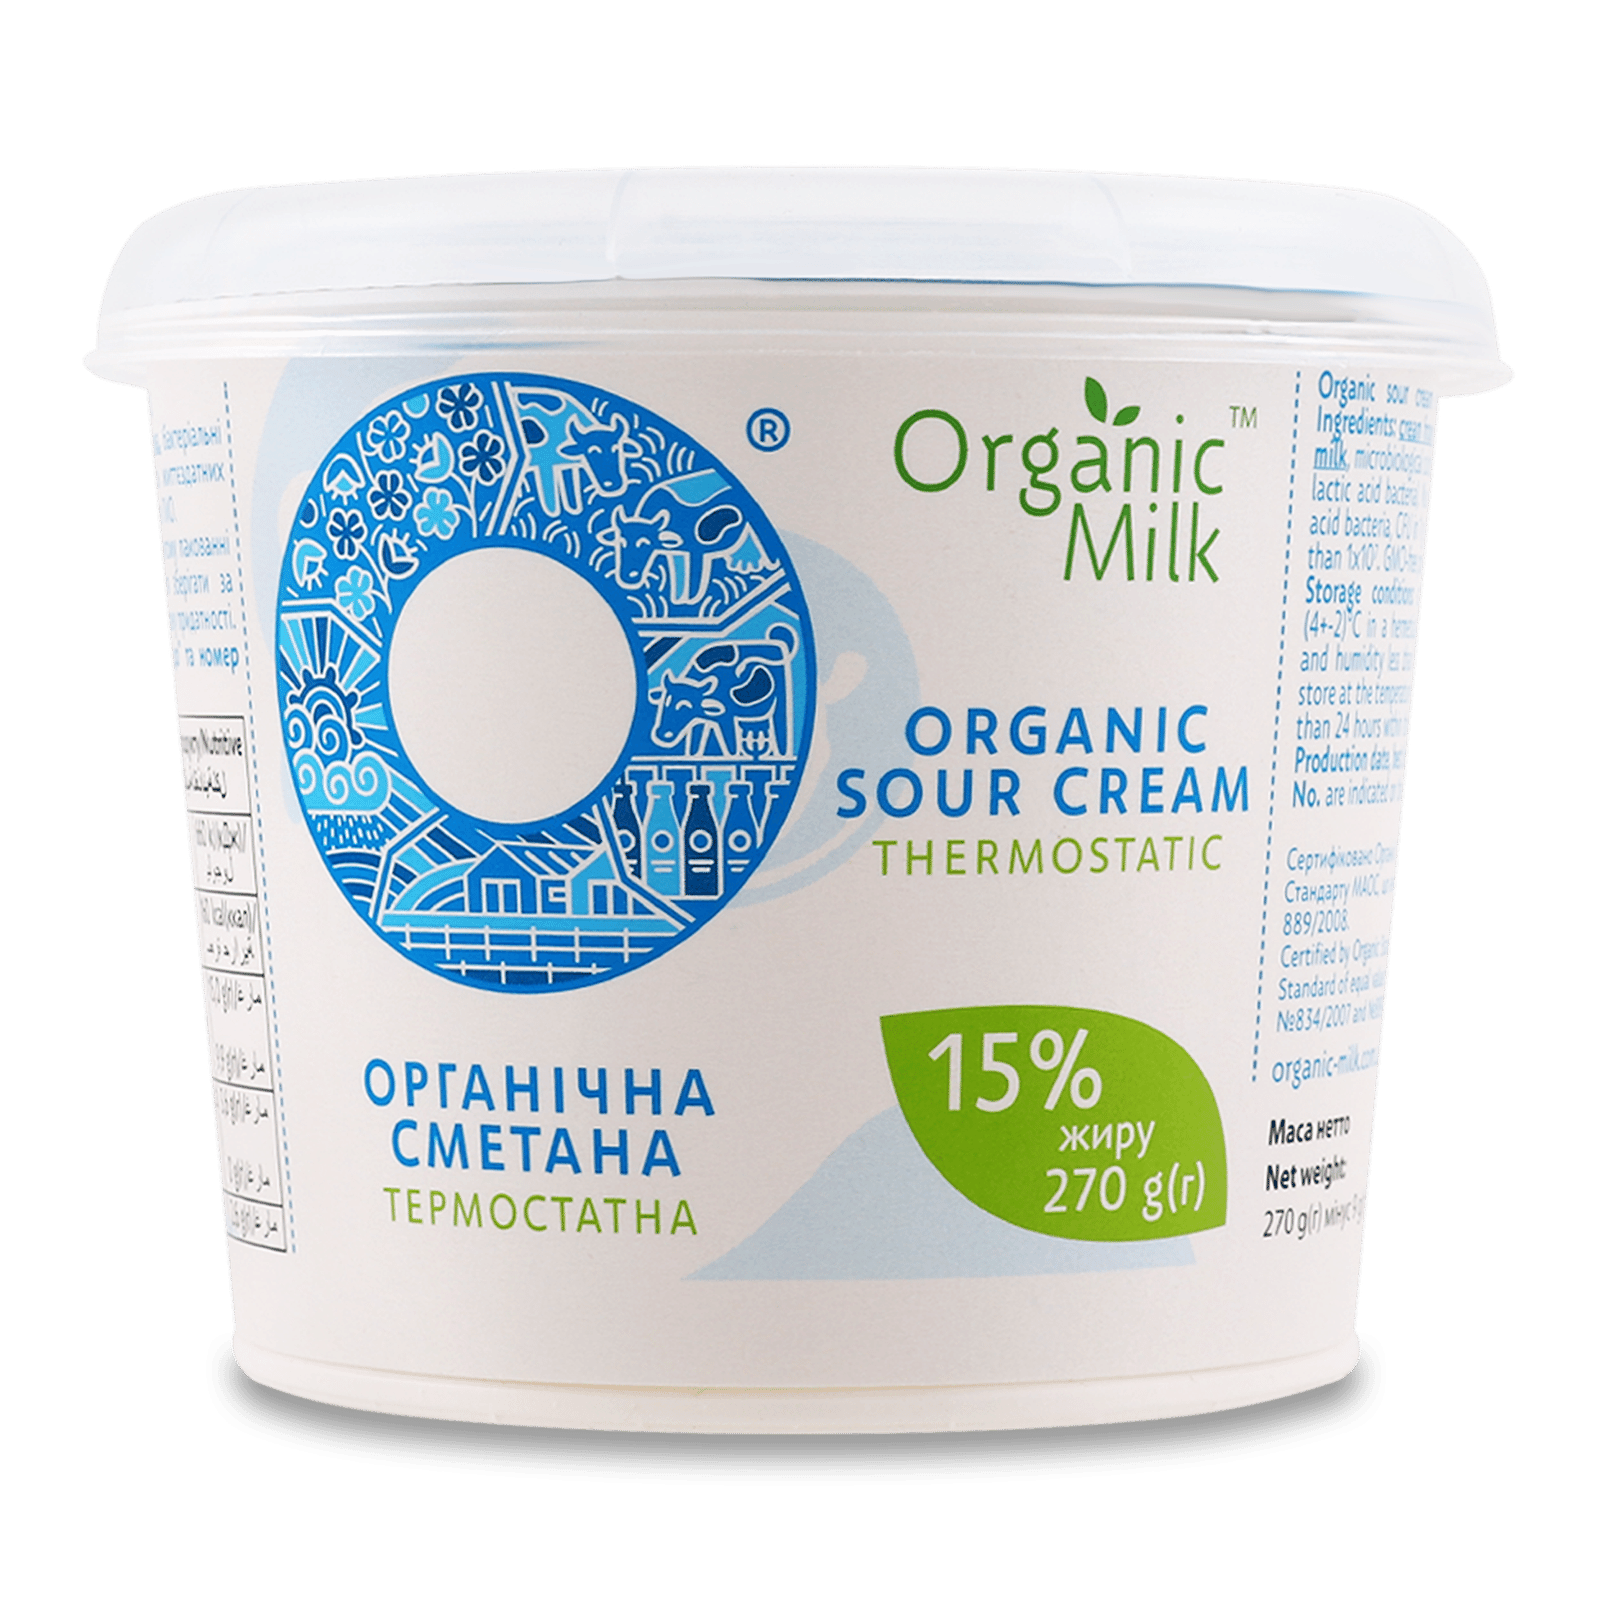 Сметана Organic Milk термостатна органічна 15% - 1